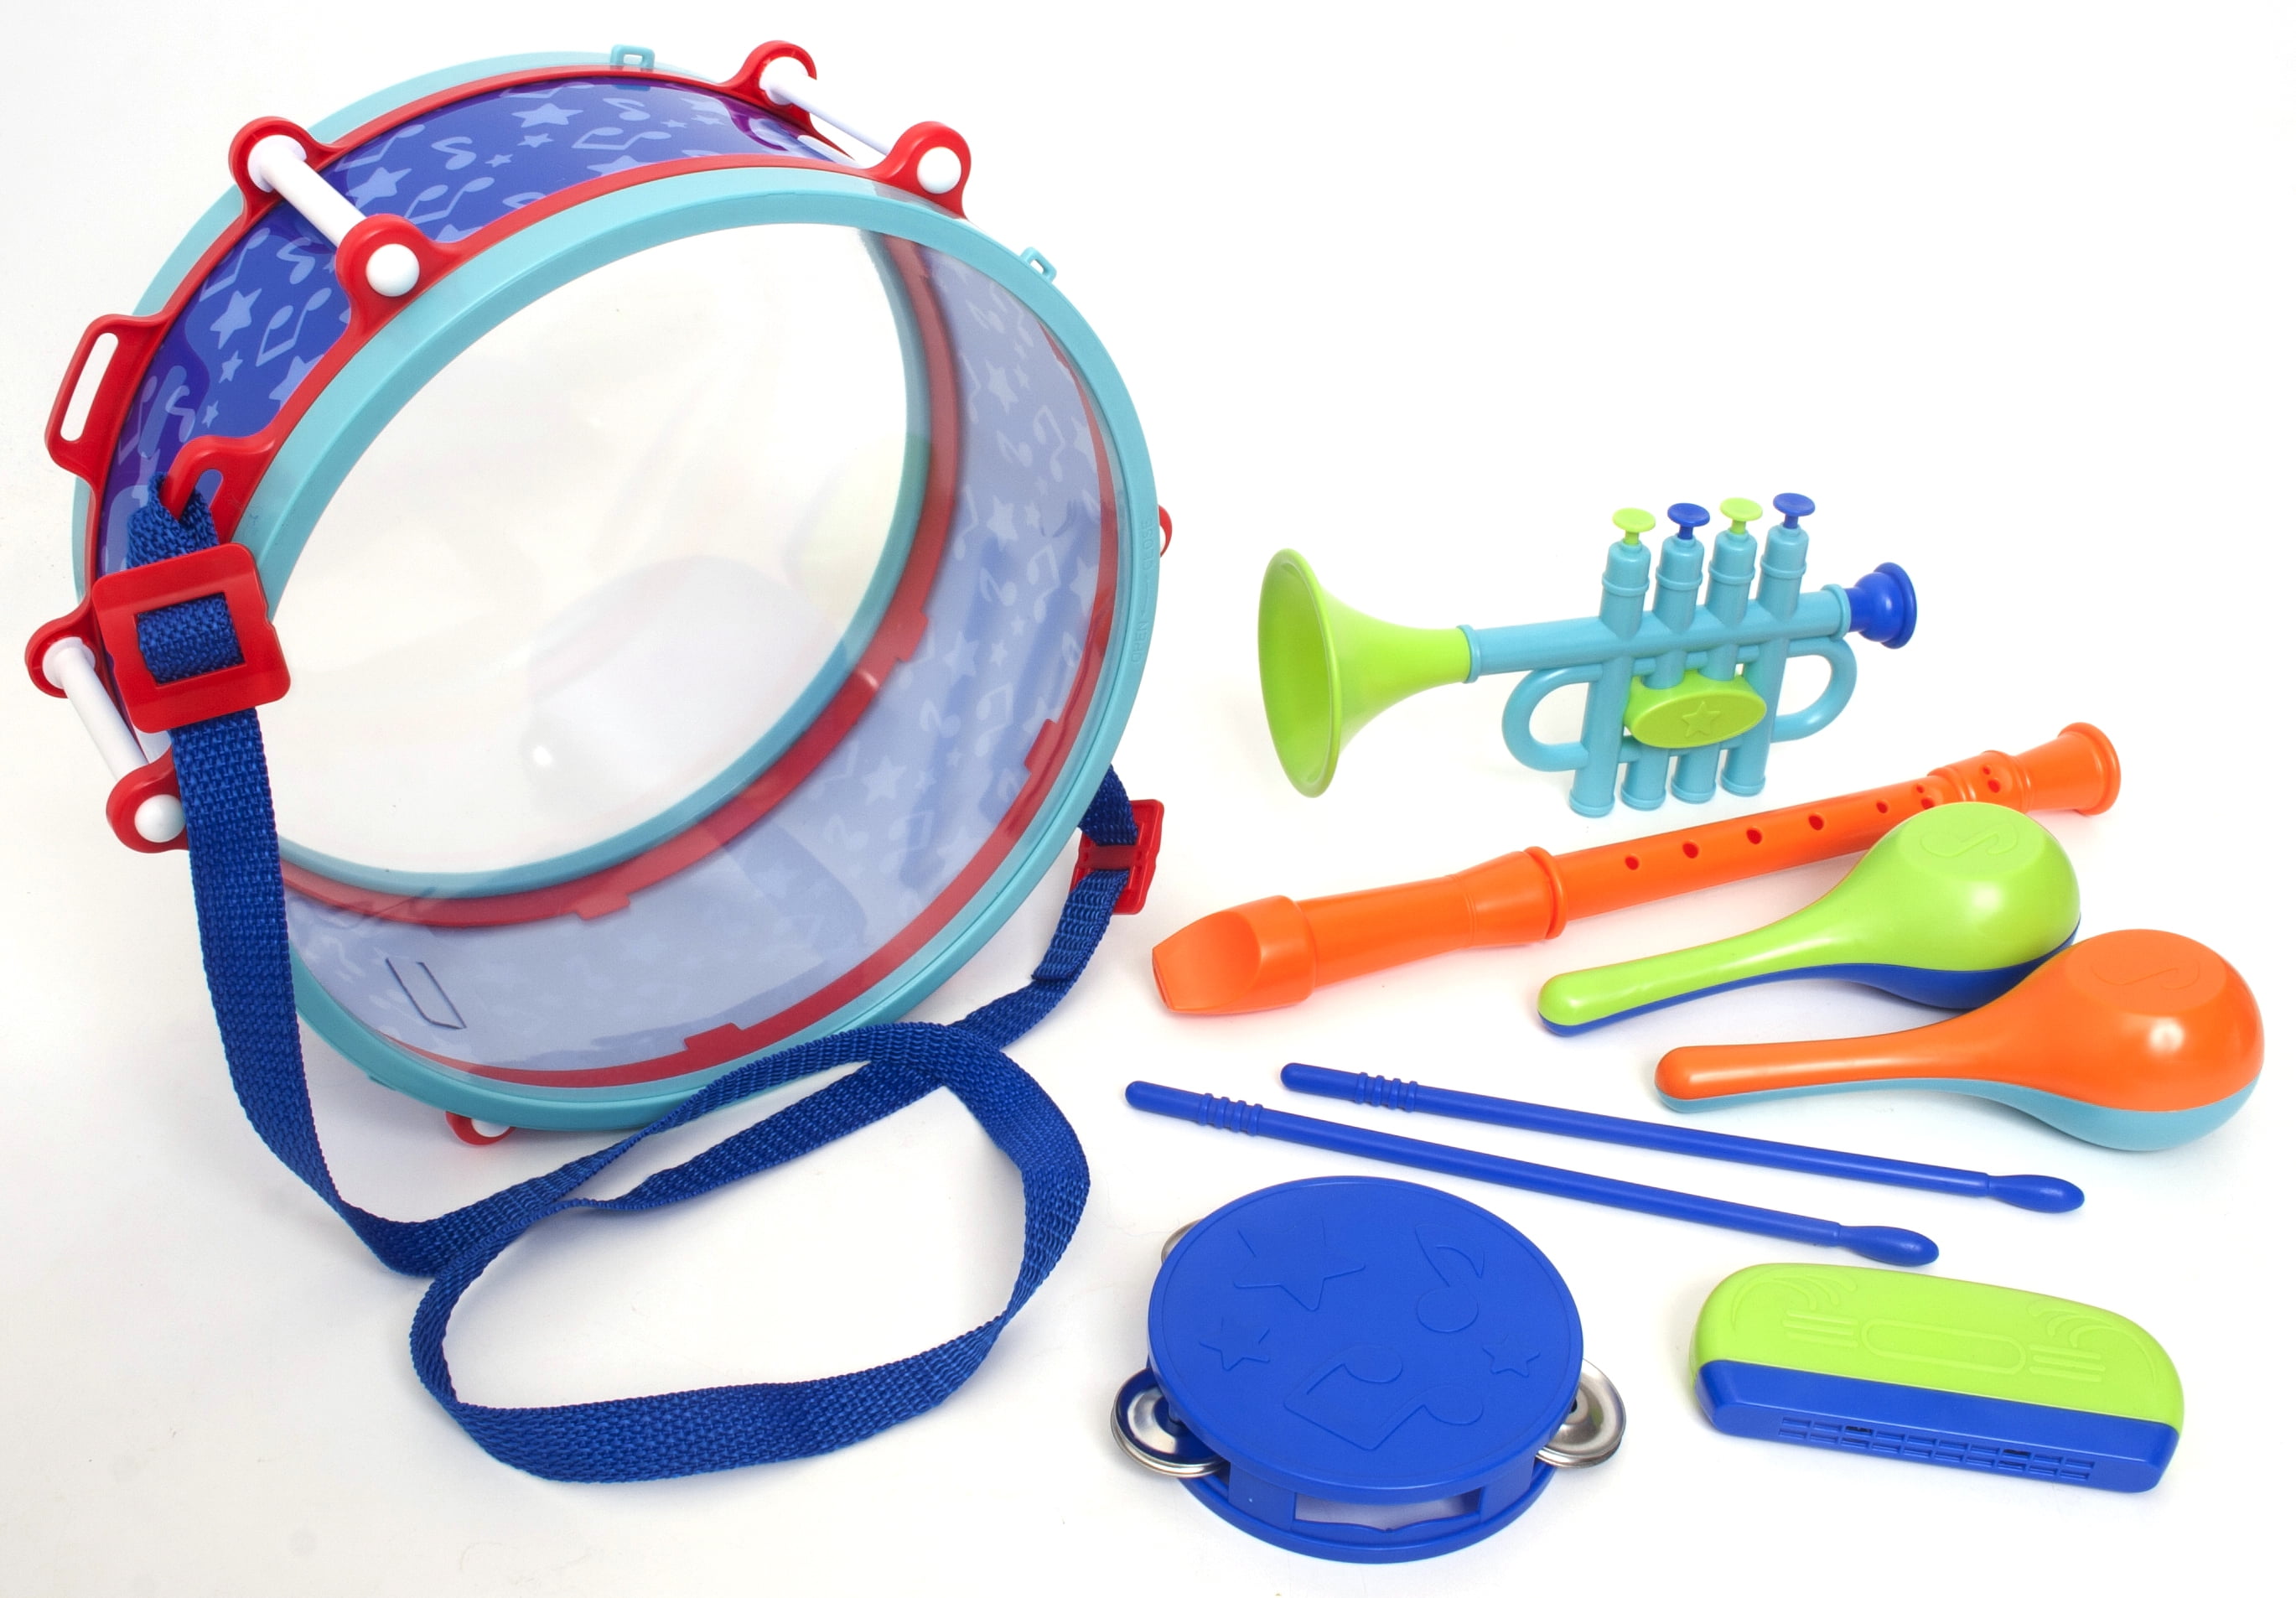 Kid Connection Preschool Pretend Musical Instrument Set - Includes Drum Set, Trumpet, Harmonica, Maracas, Flute, Tambourine, 9 Pieces  Great for Preschoolers and Young Children!